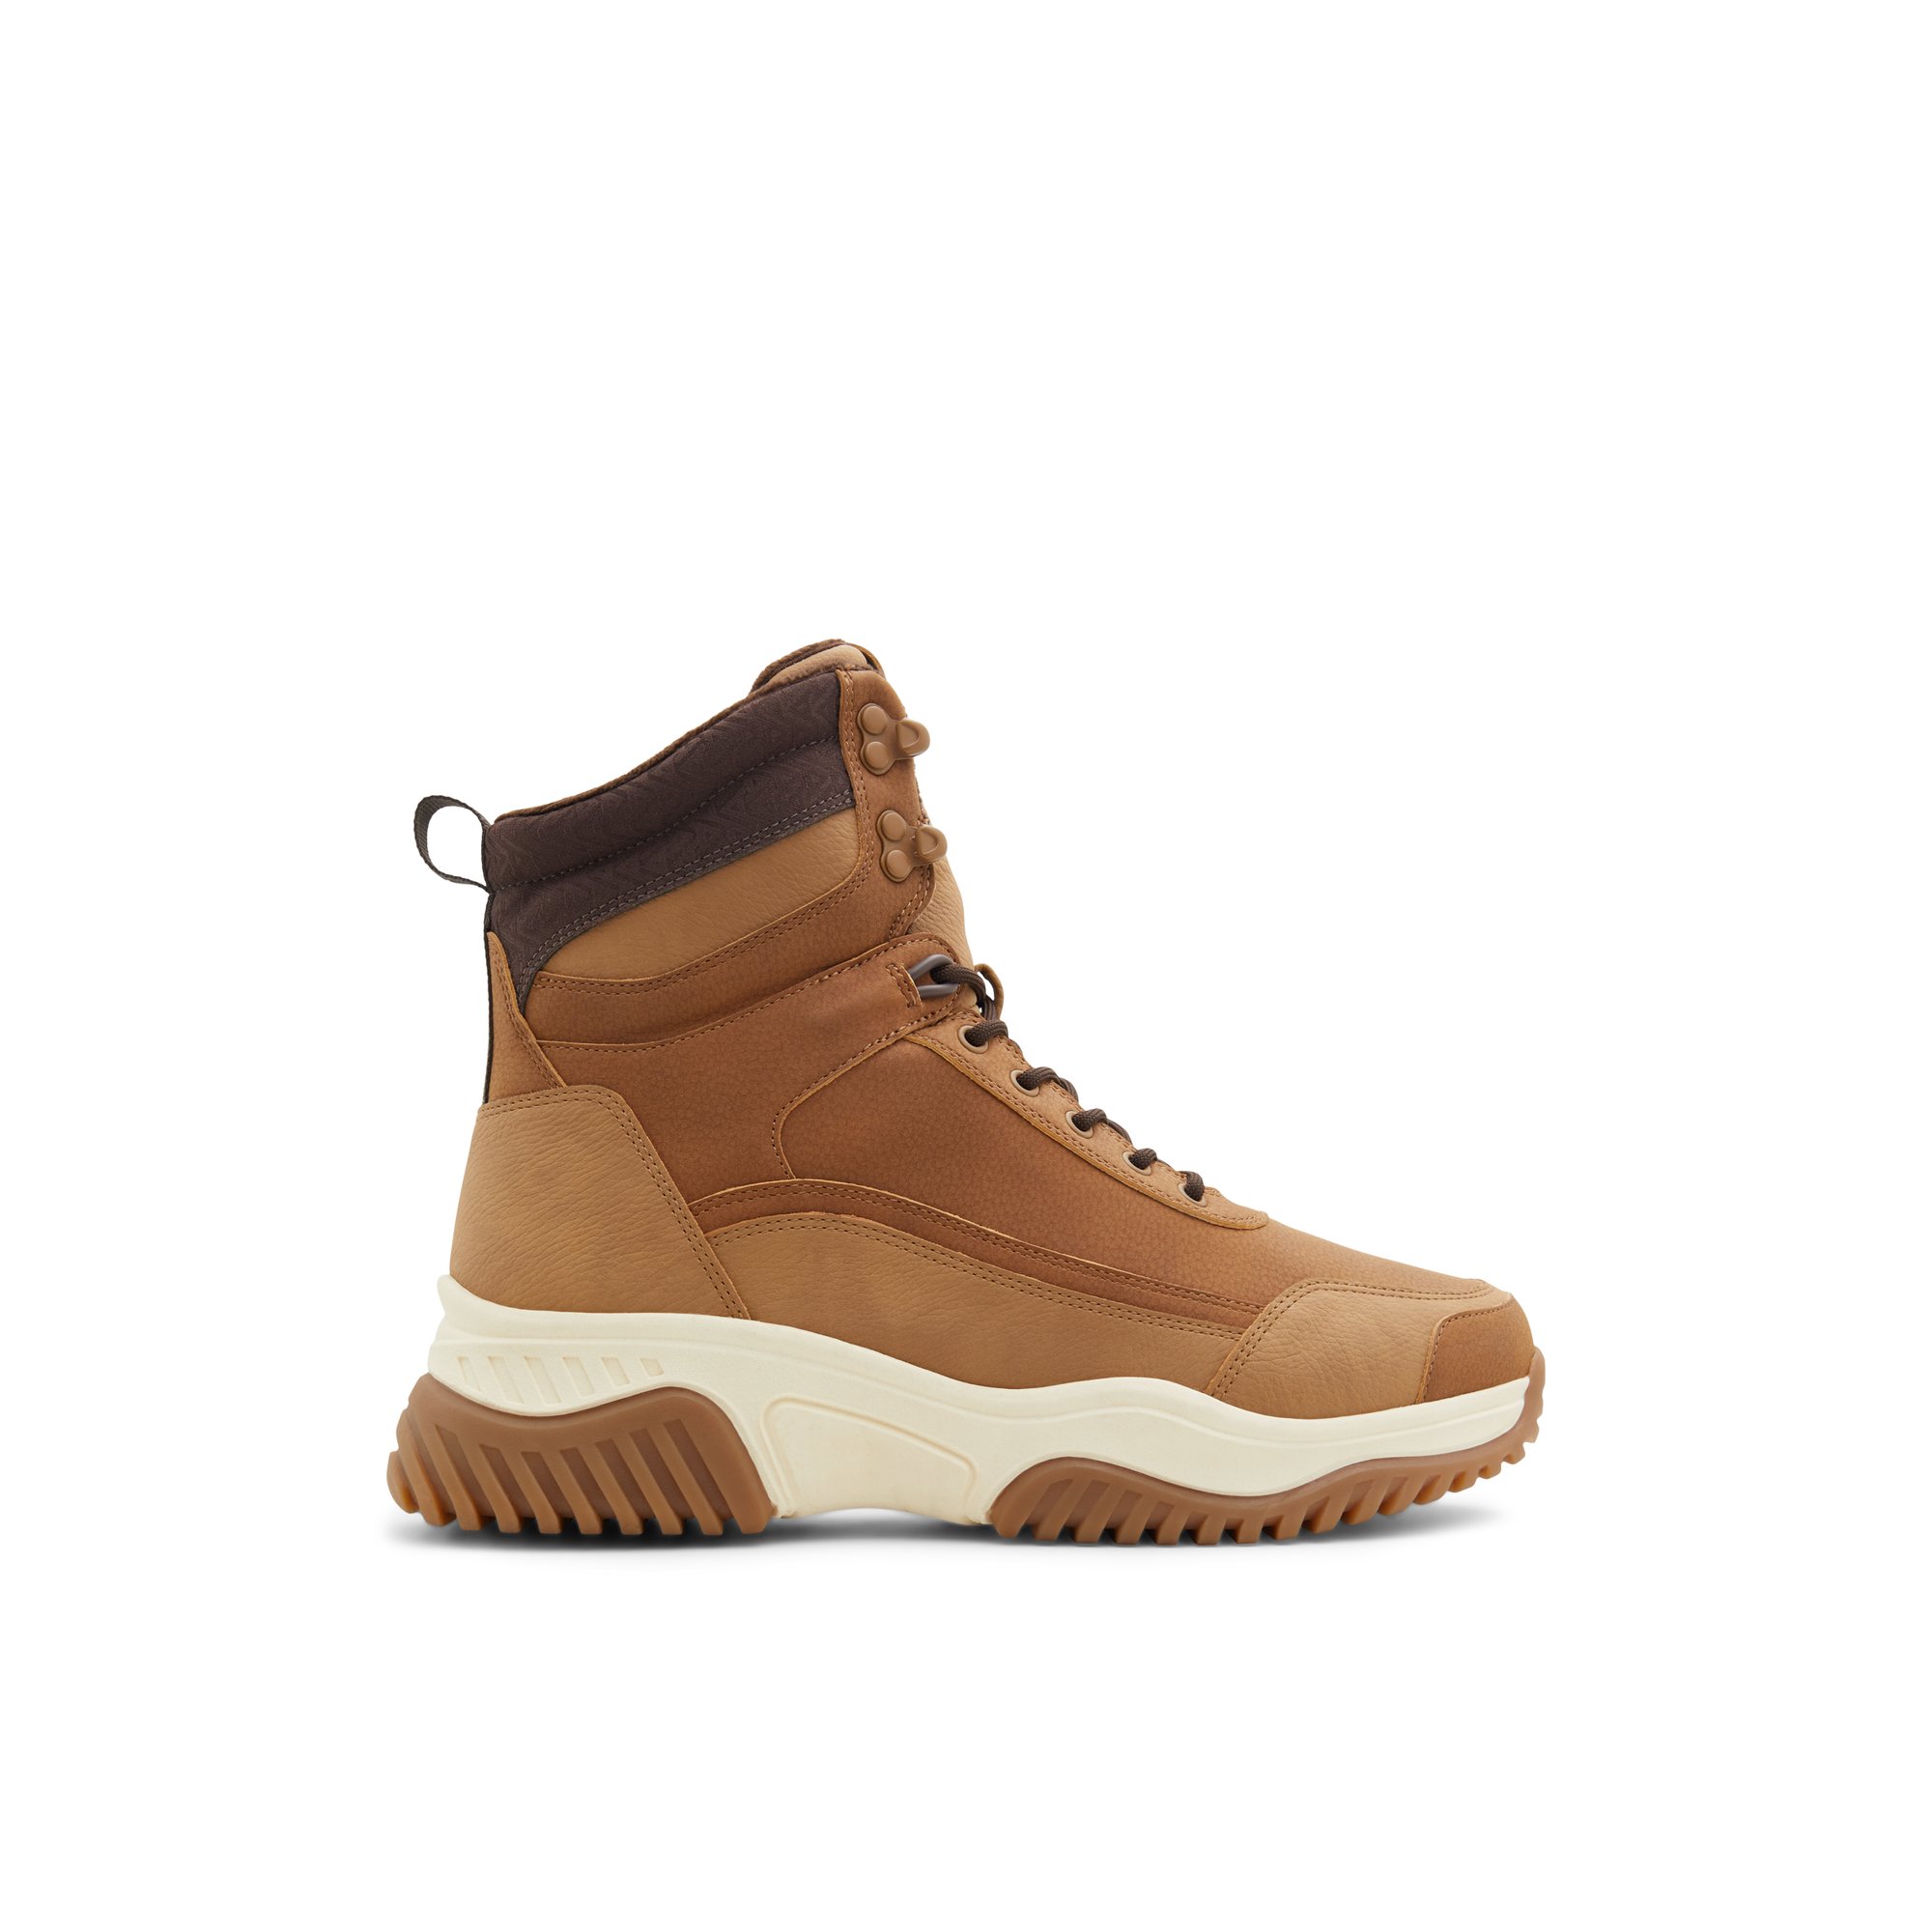 ALDO Mountrock - Men's Boots Casual - Brown